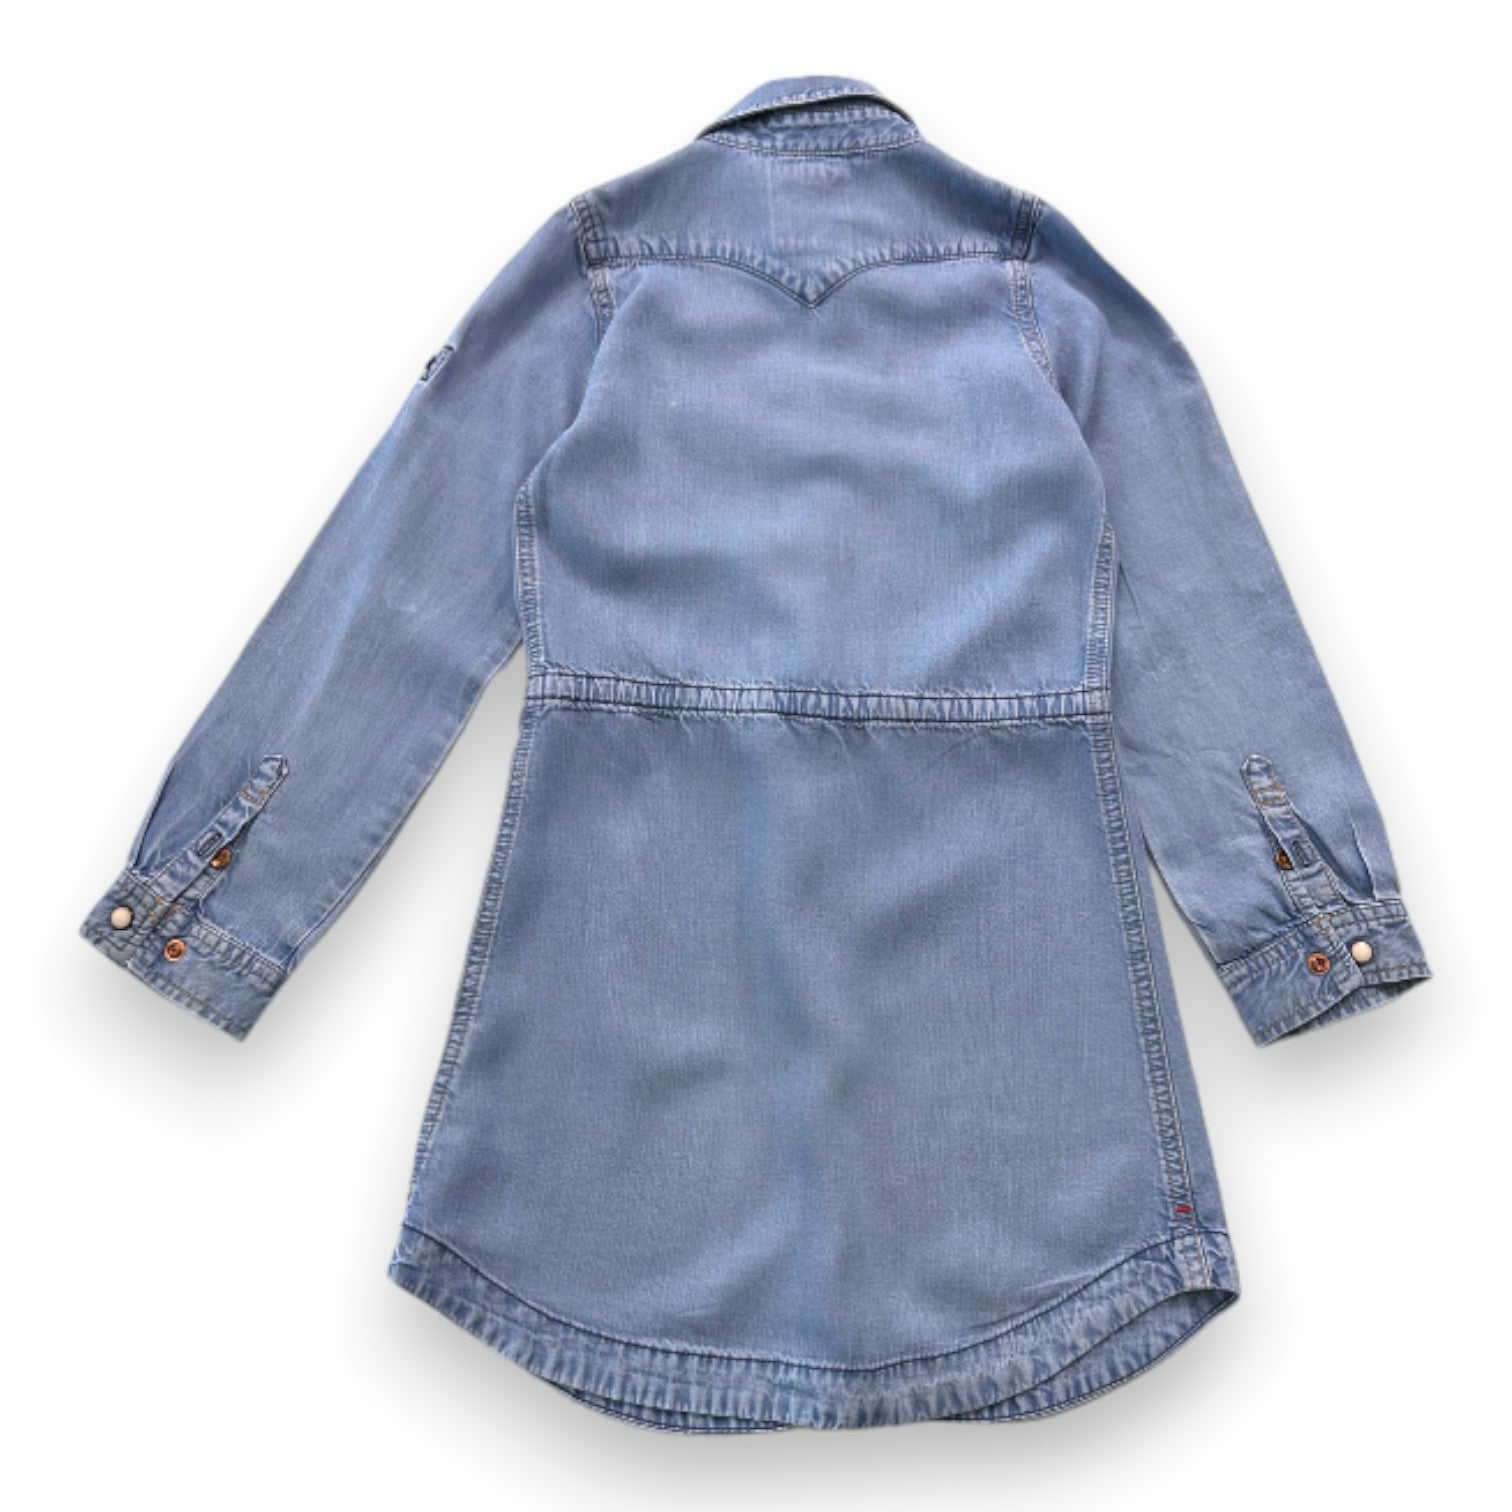 LEVI'S - Robe en jean bleue - 8 ans